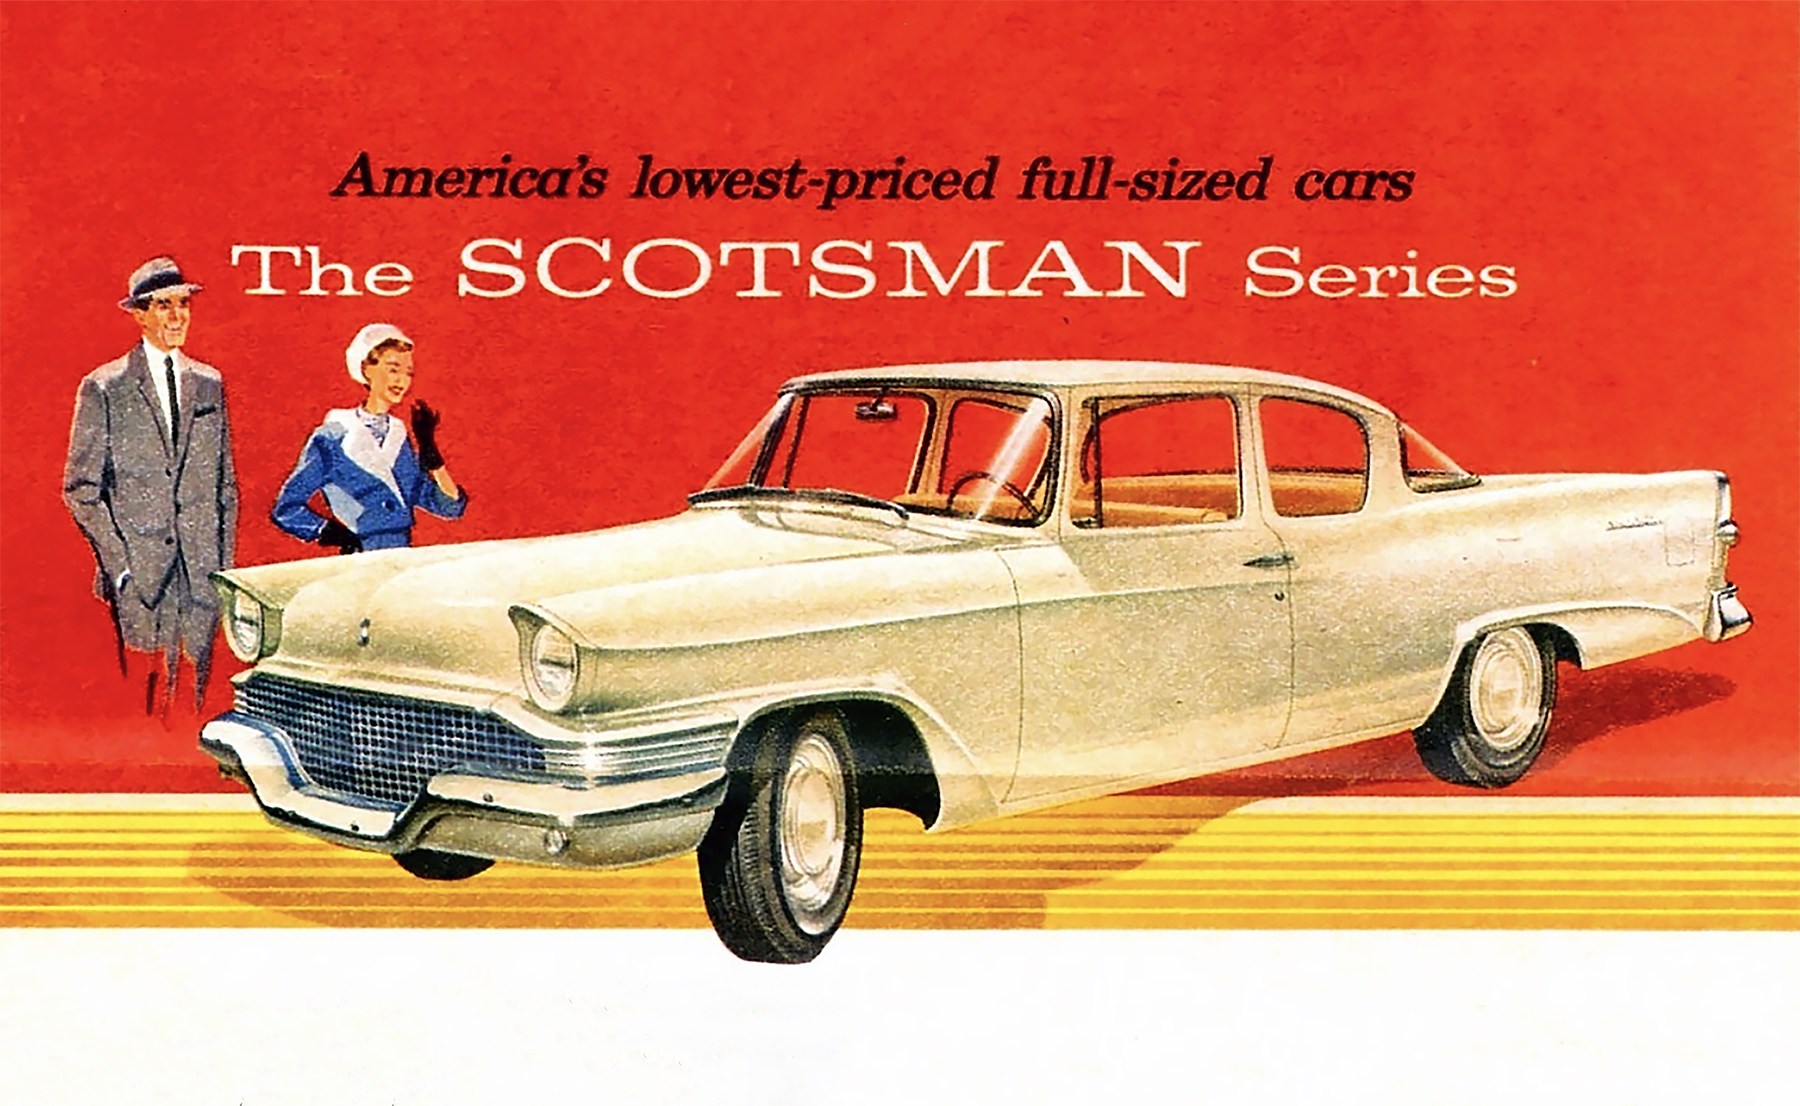 1958 Studebaker Scotsman Ad